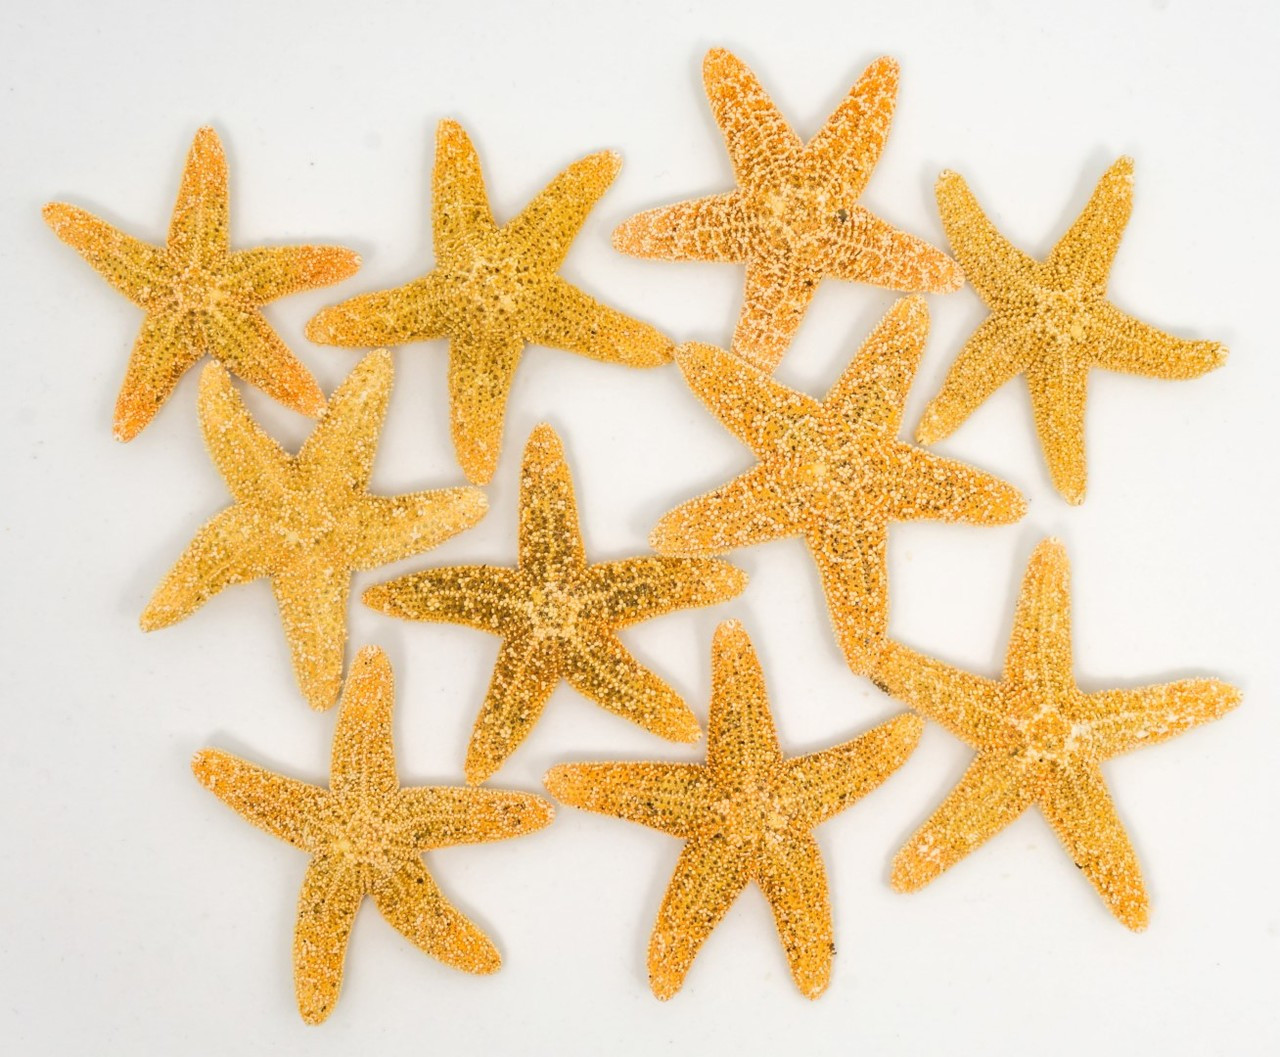 Starfish 12 Brown Sugar Starfish 2-3 for Crafts and Decor